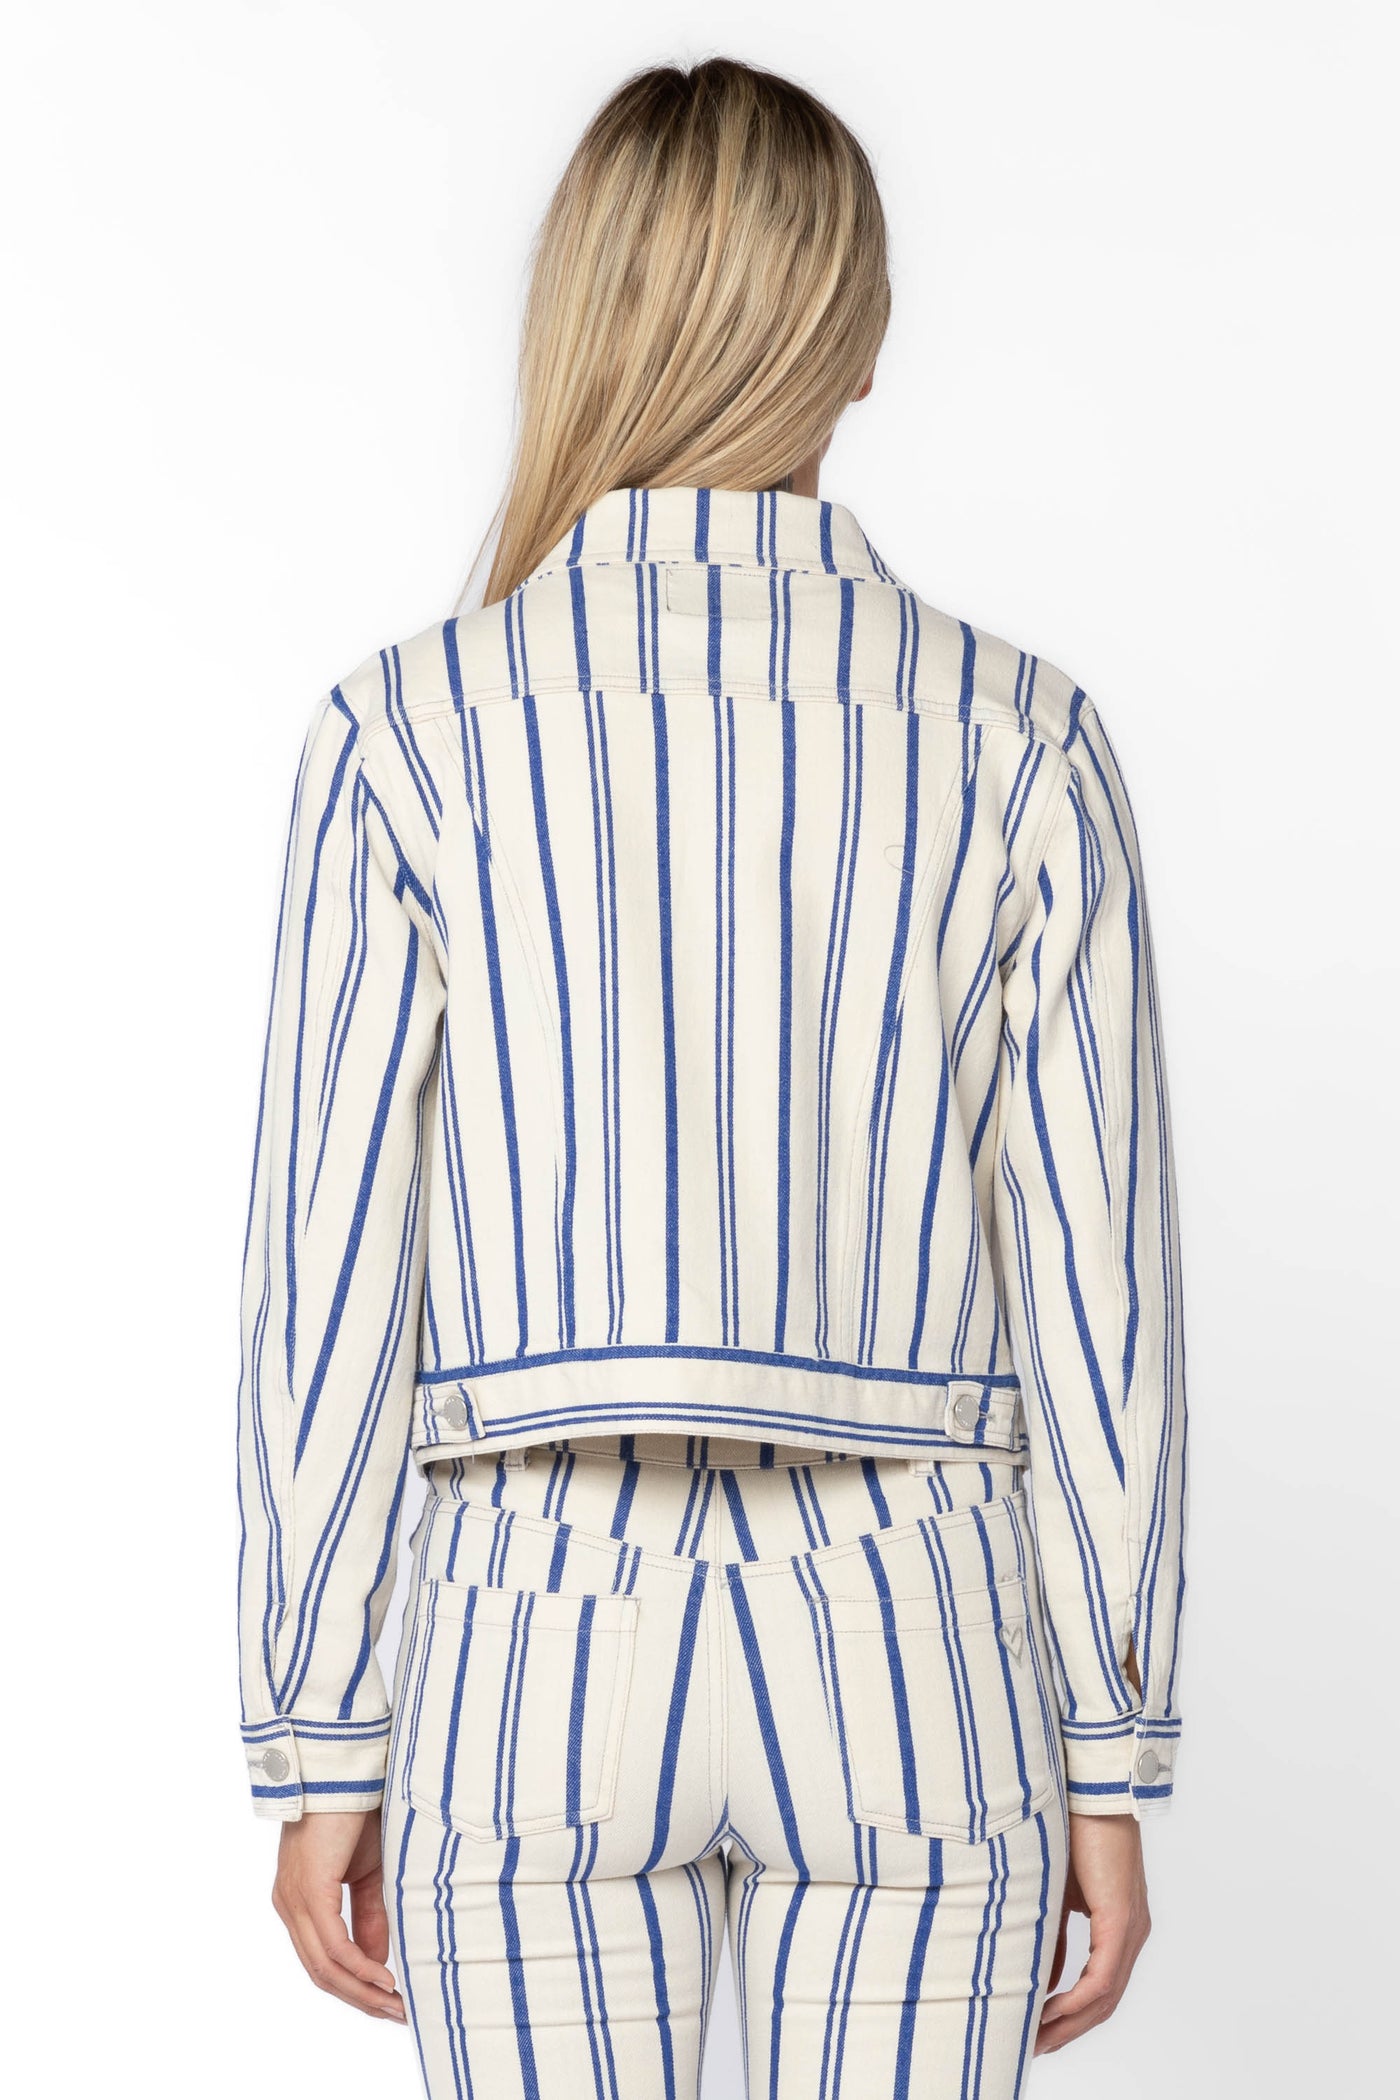 Gloria Blue Stripe Jacket - Jackets & Outerwear - Velvet Heart Clothing